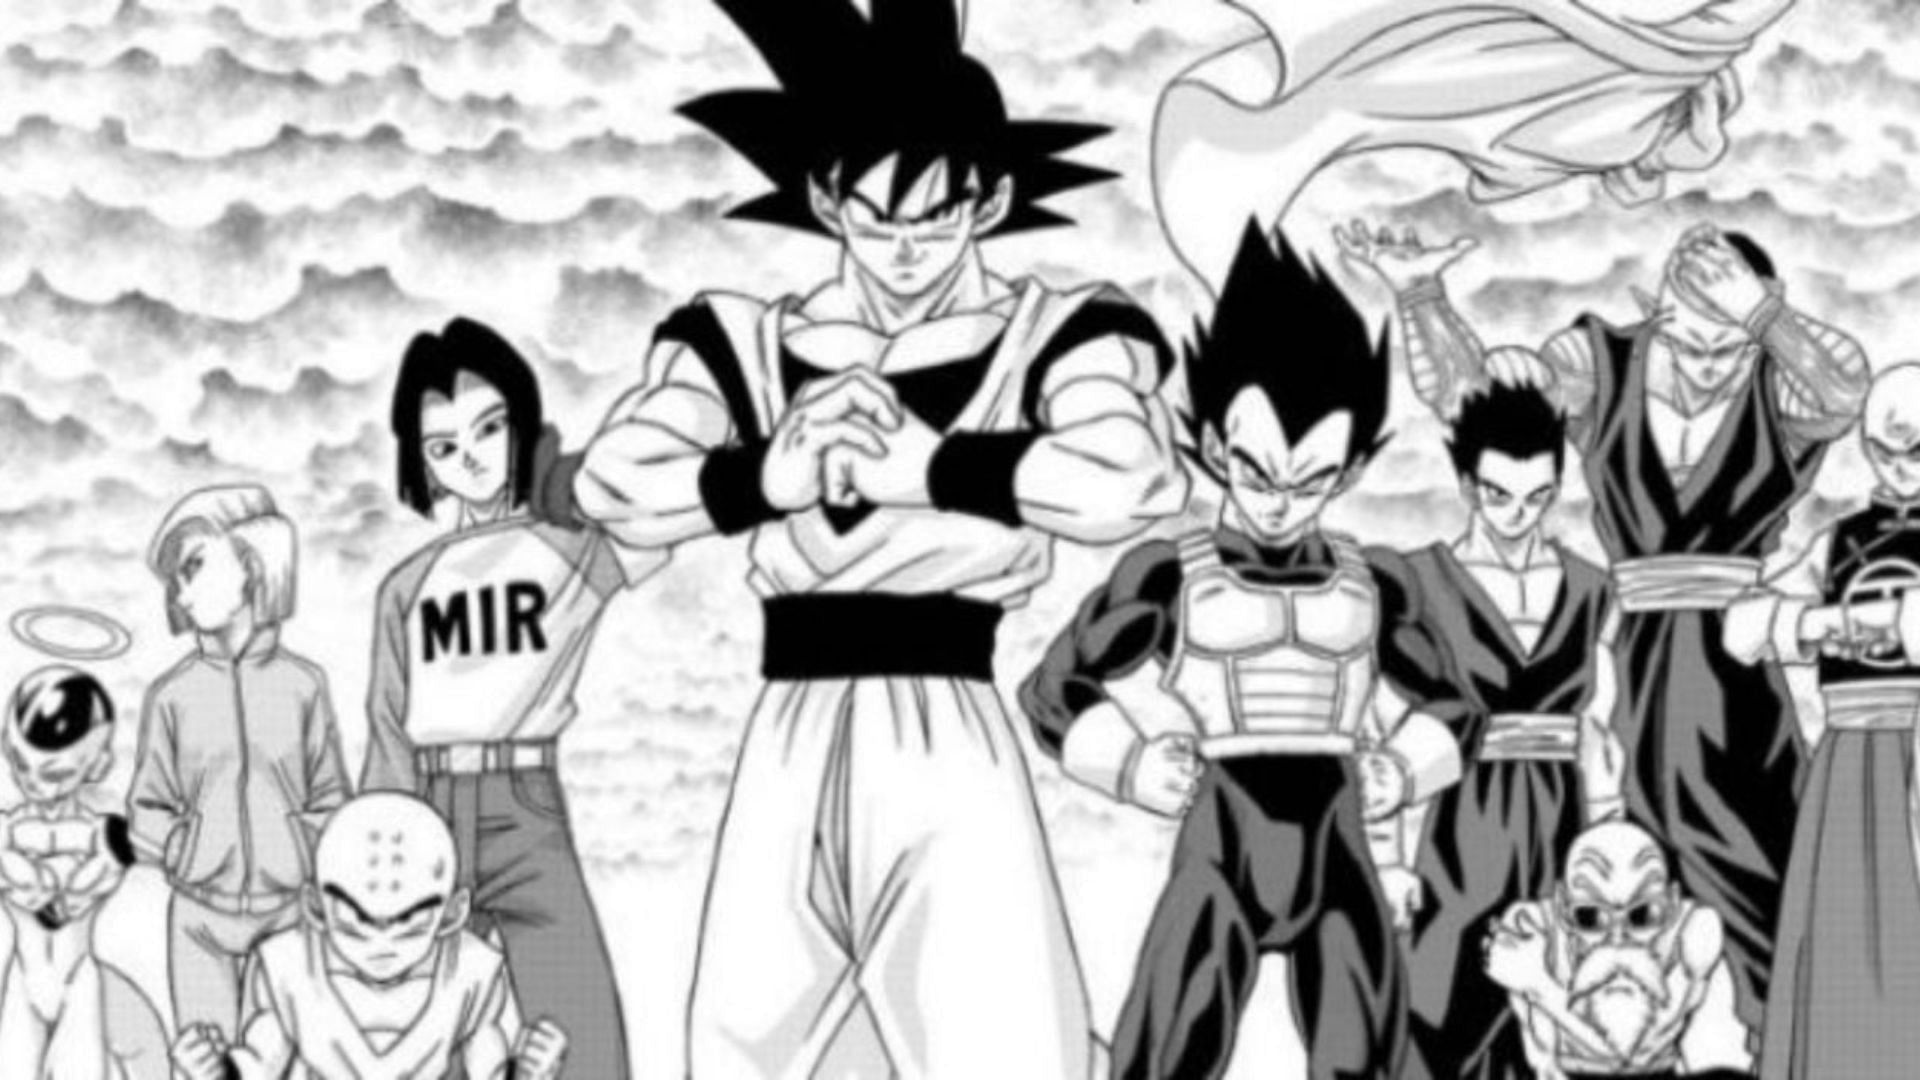 Team Universe 7 as shown in Dragon Ball Super manga (Image via Shueisha)